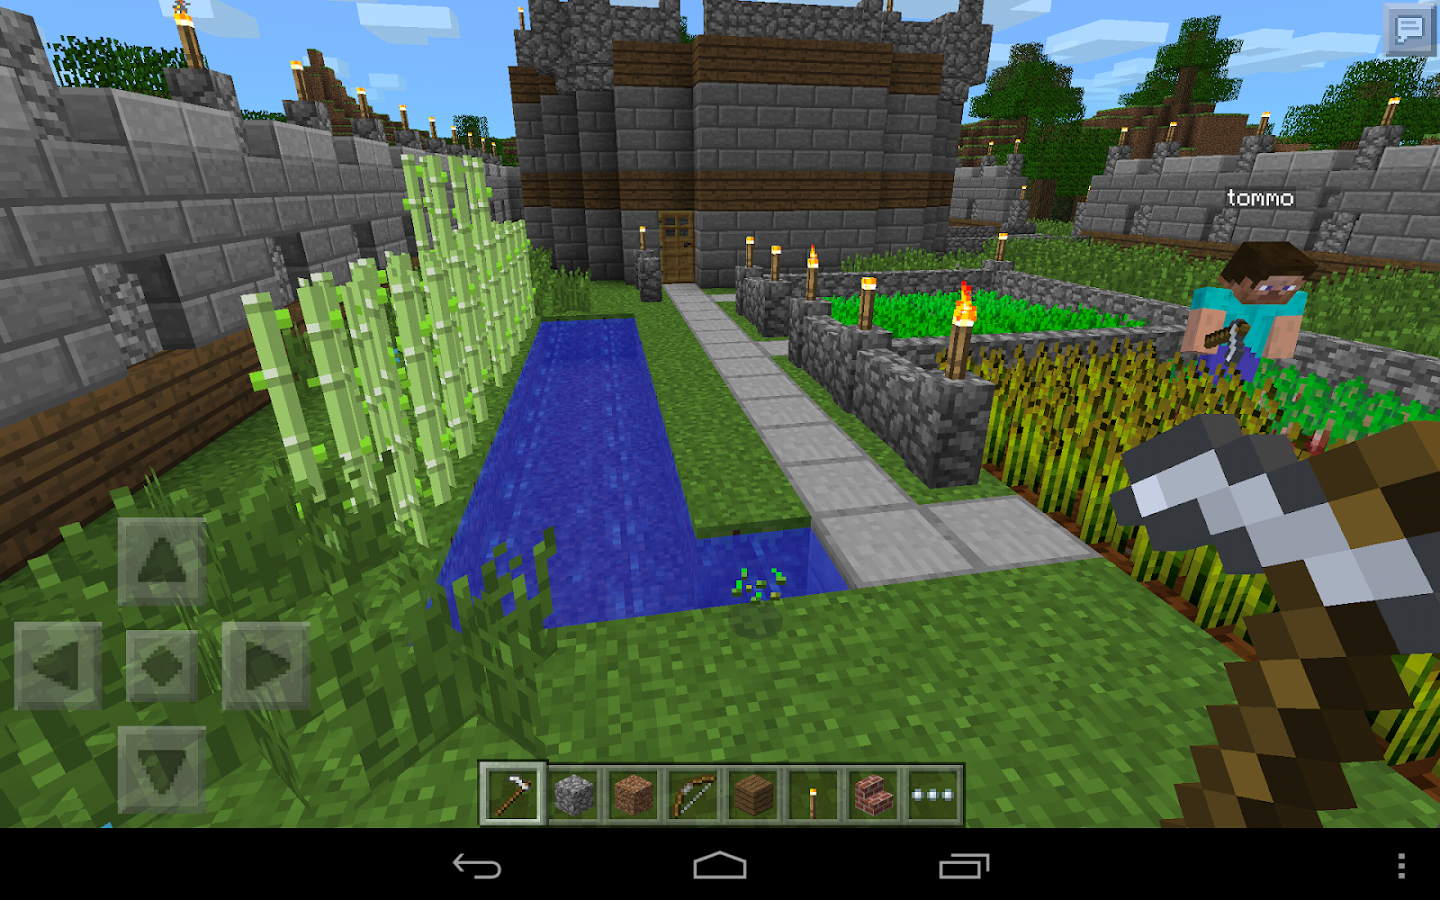 Minecraft - Pocket Edition - screenshot